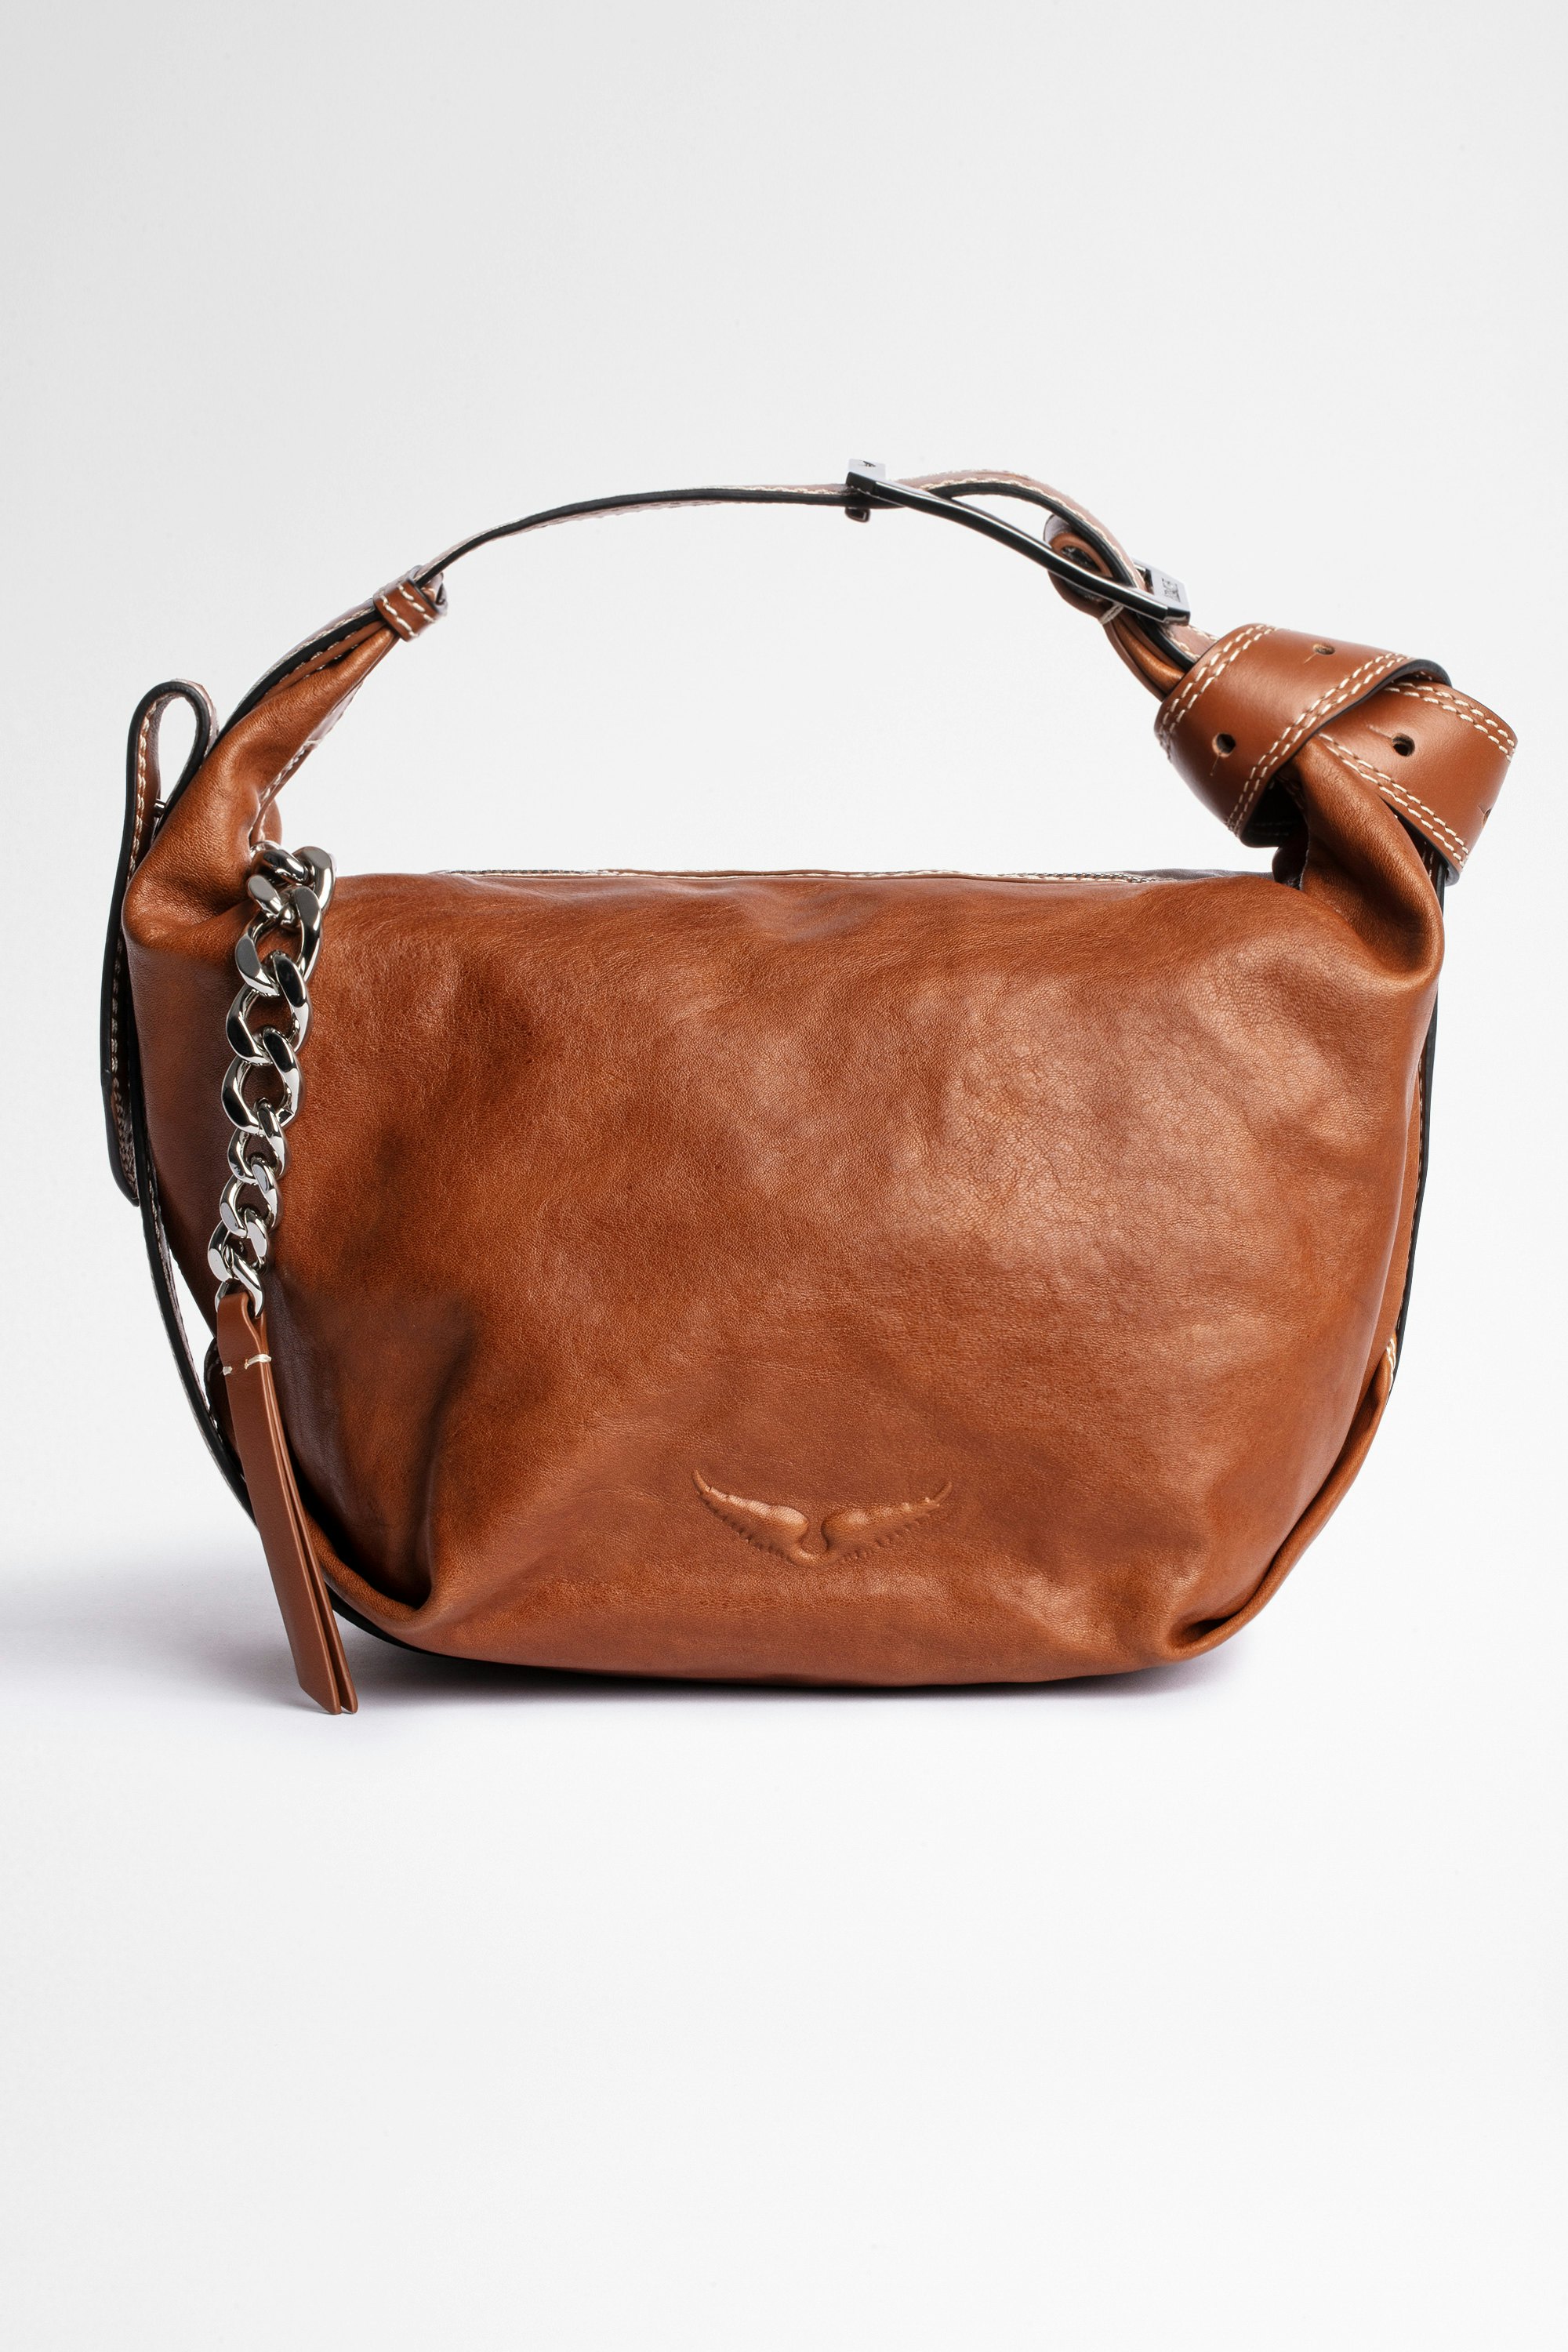 Le Cecilia Bag Women's camel-colored leather shoulder or crossbody bag